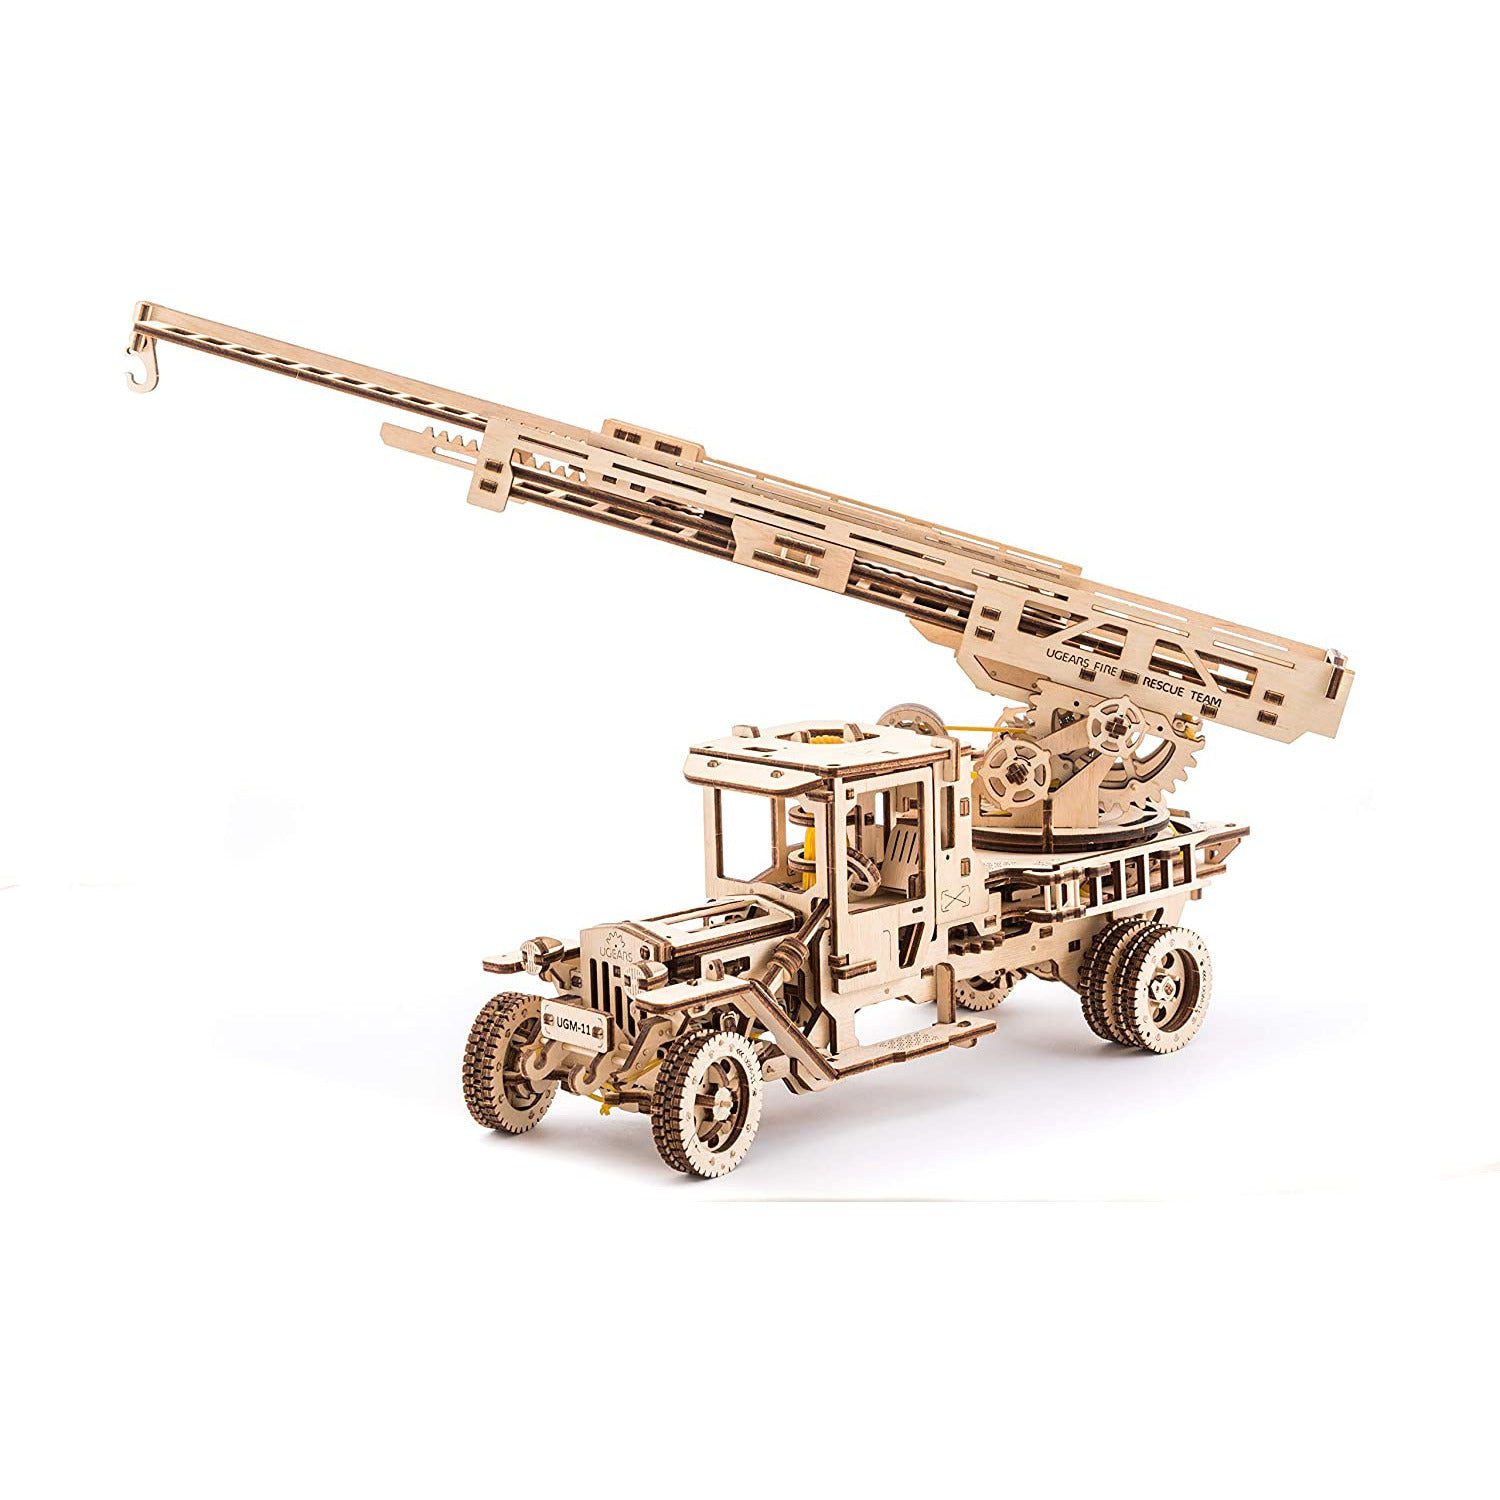 Ugears Fire Ladder Truck Building Kit: 537 pieces / Wooden Building Set